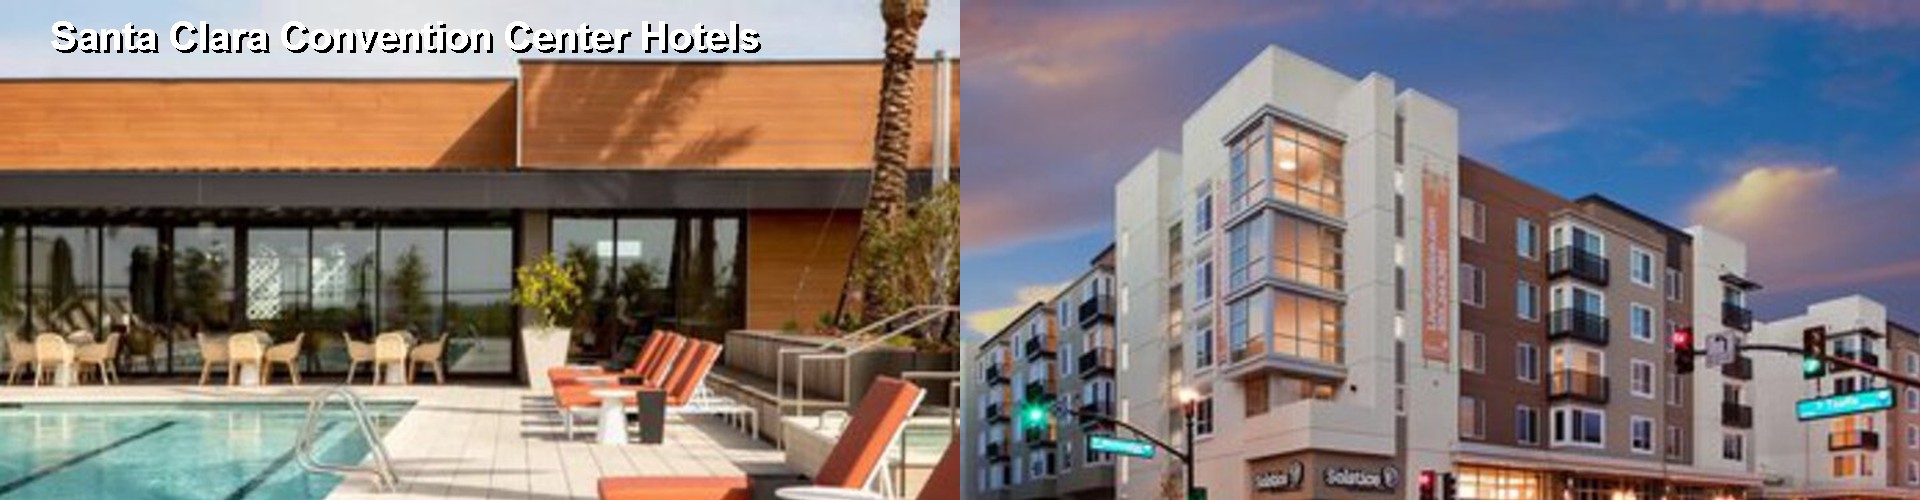 5 Best Hotels near Santa Clara Convention Center